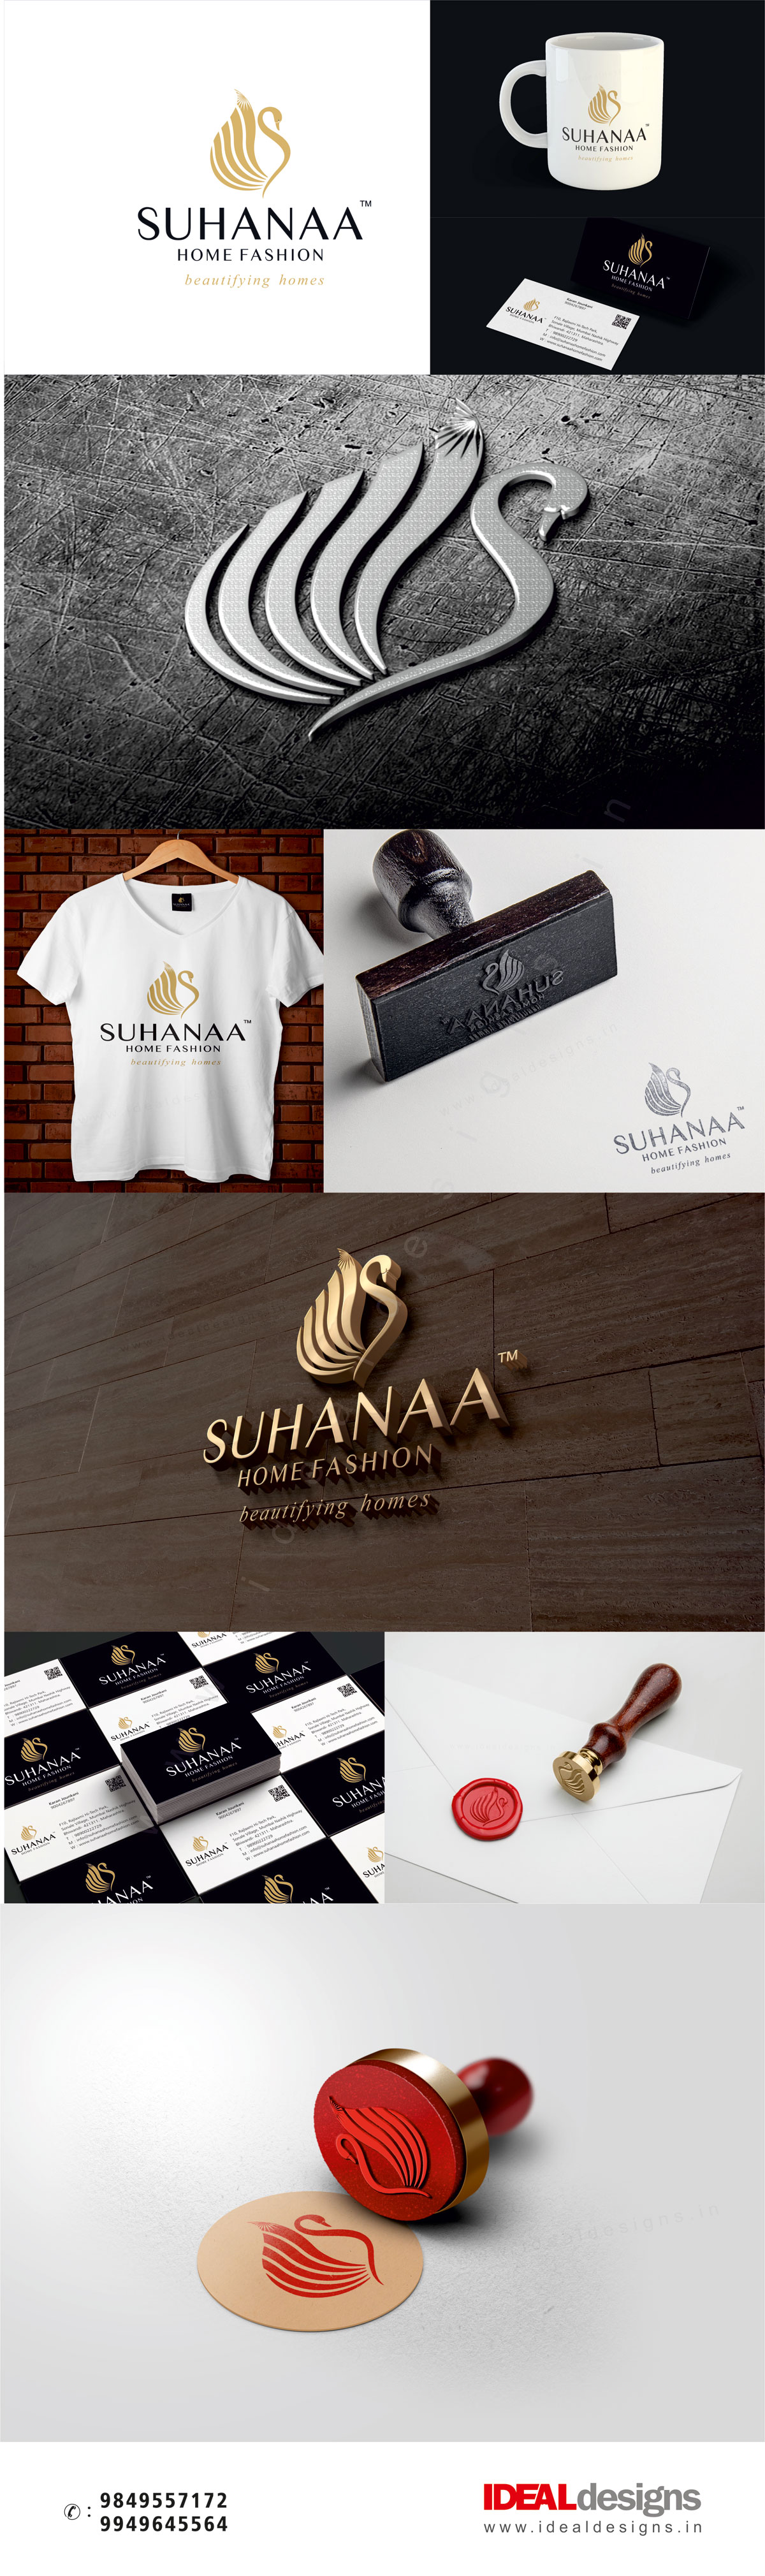 suhana-furniture-and-furnishings-branding-india-professional-designs-hyderabad-corporate-style-branidng-hyderabad-suhana